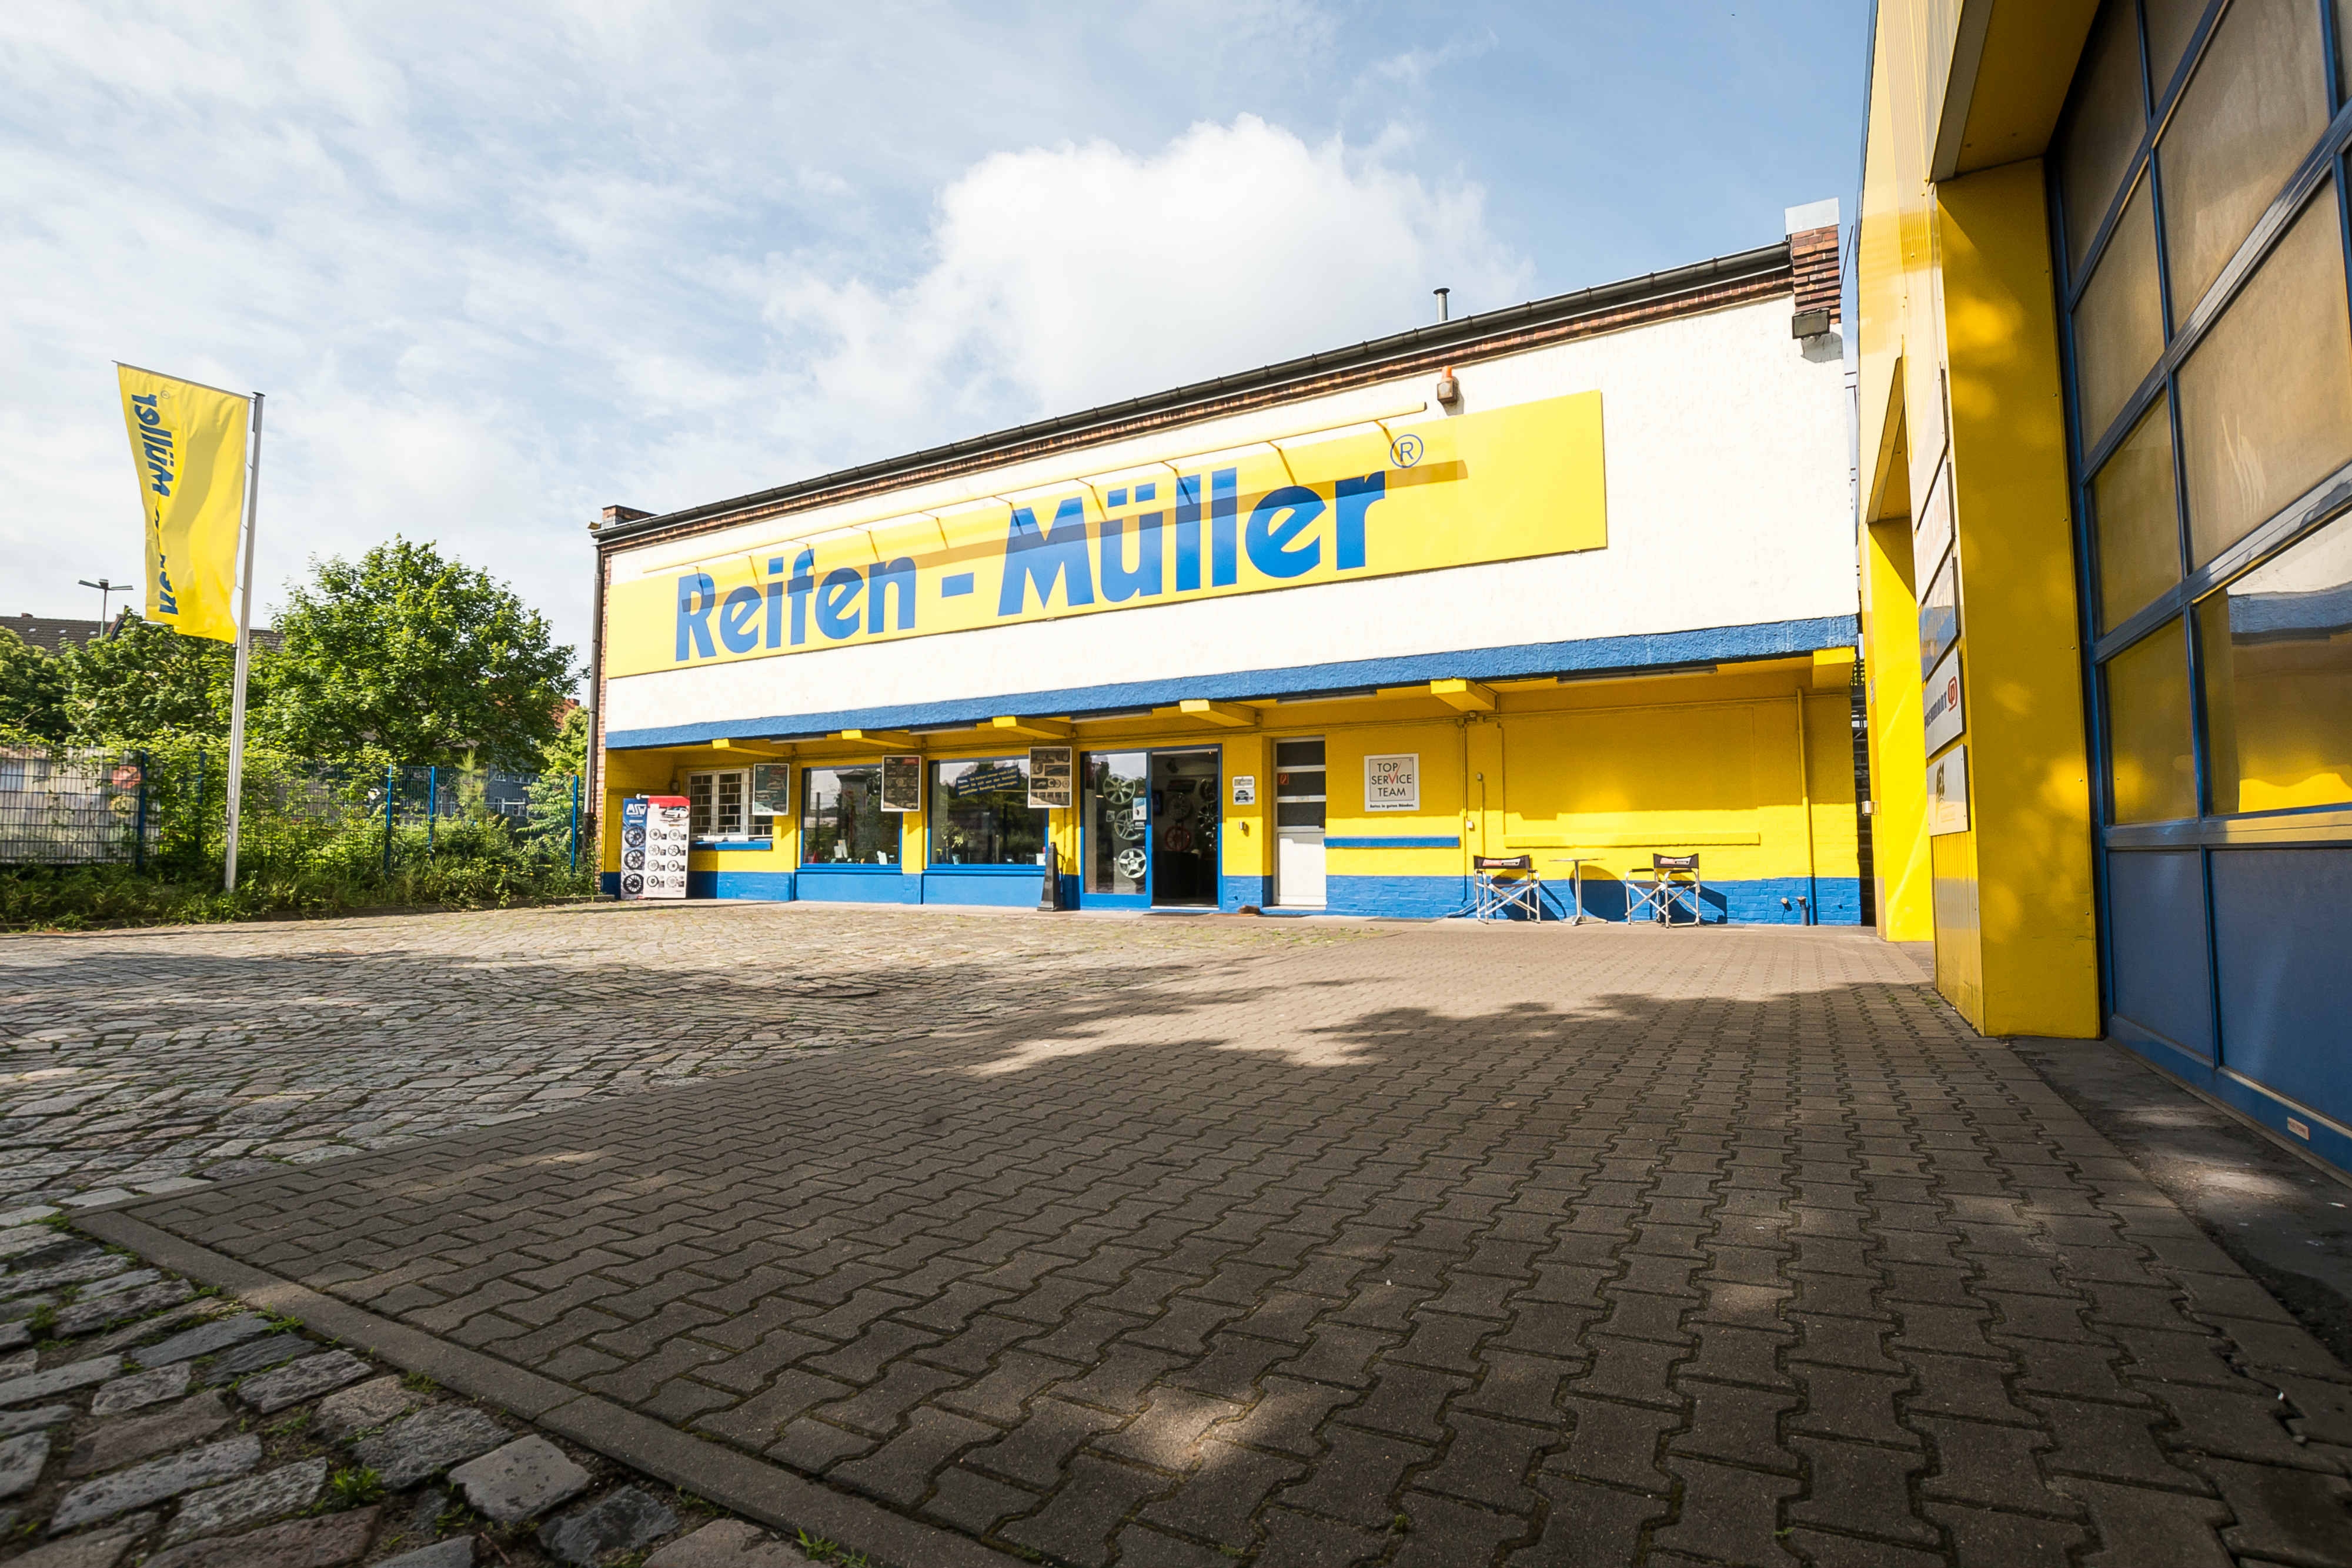 Fotos - Reifen-Müller, Georg Müller GmbH & Co.KG - 2